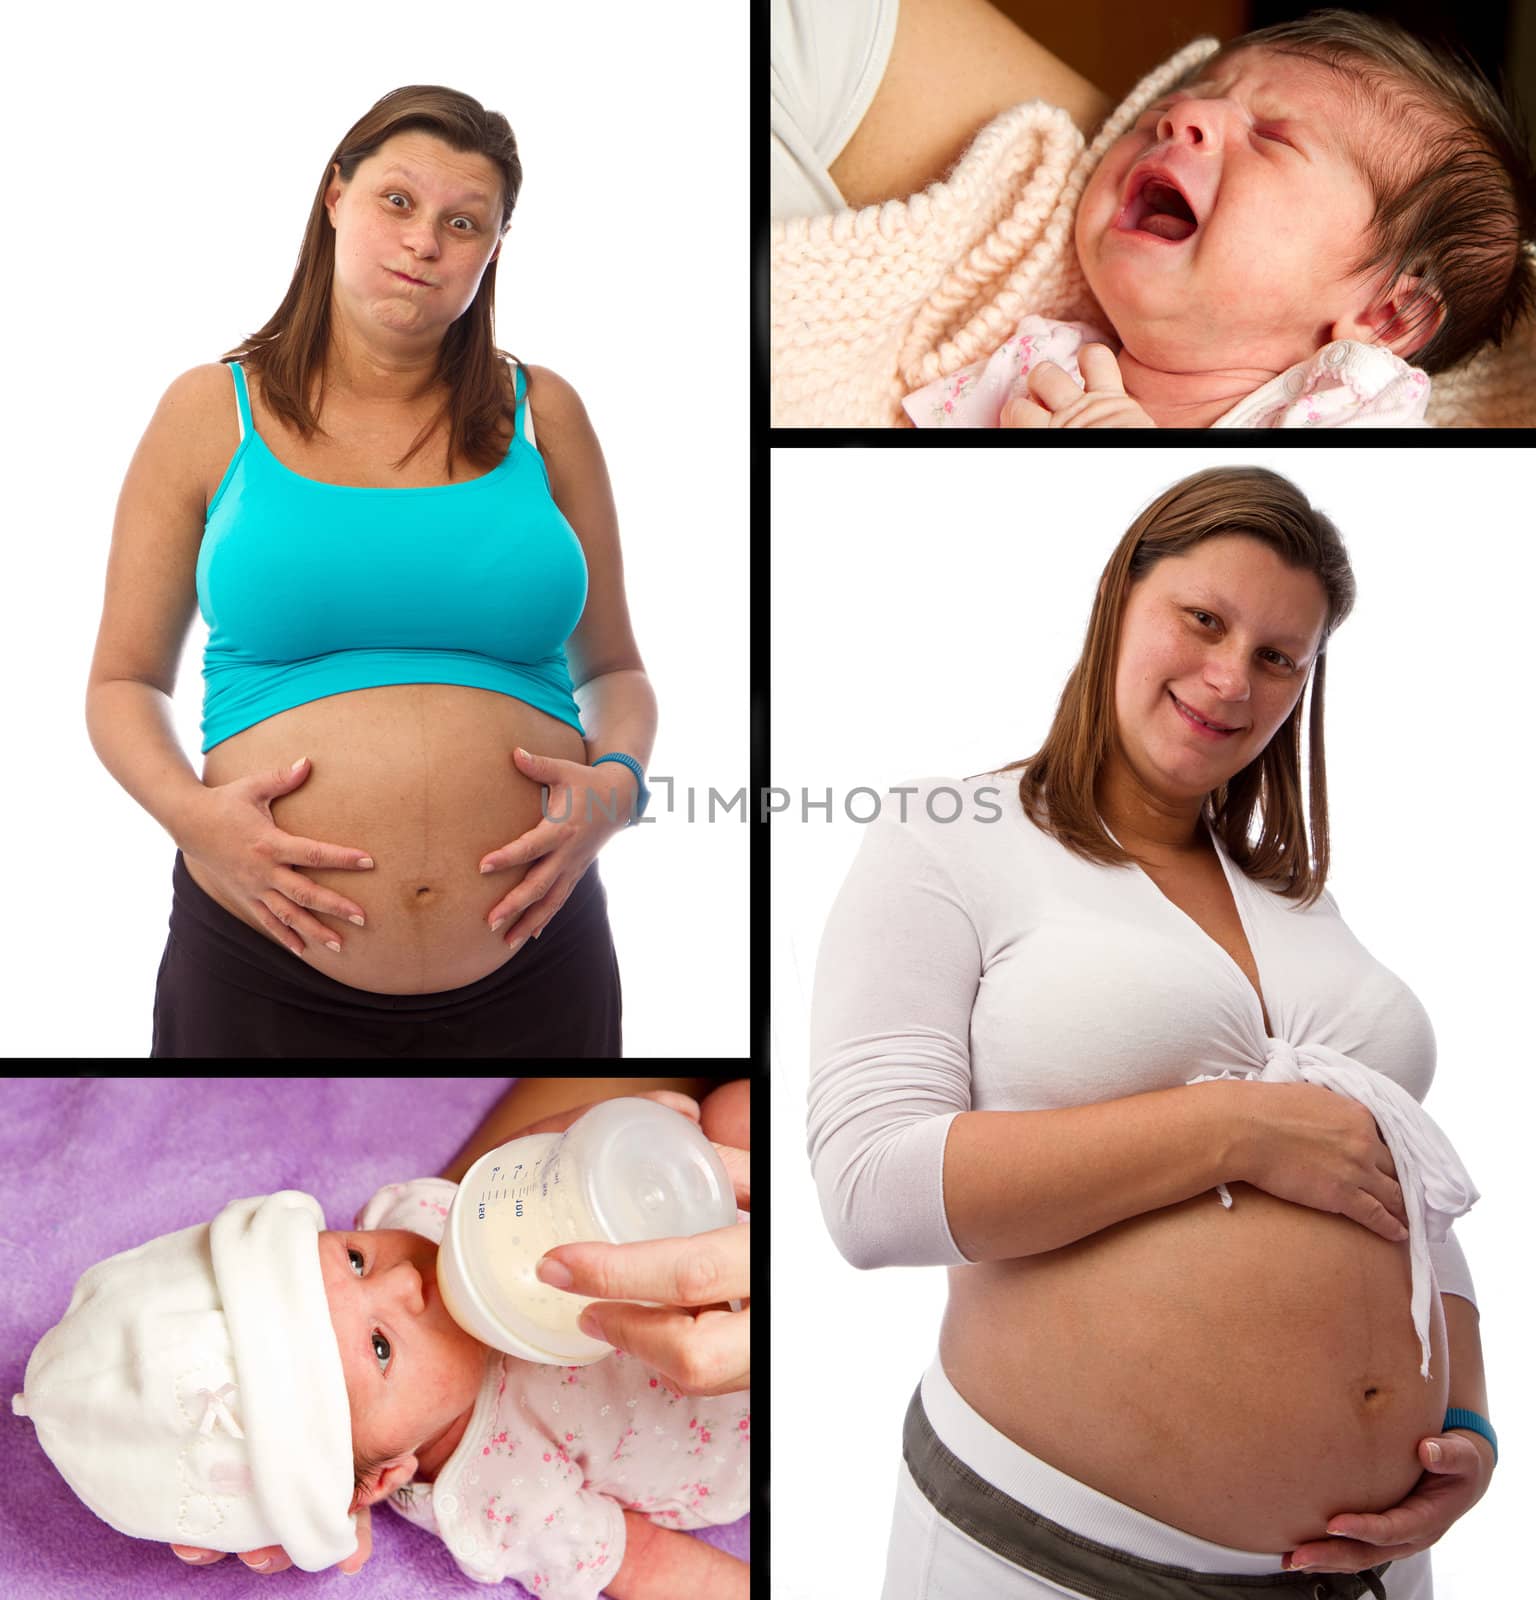 maternity